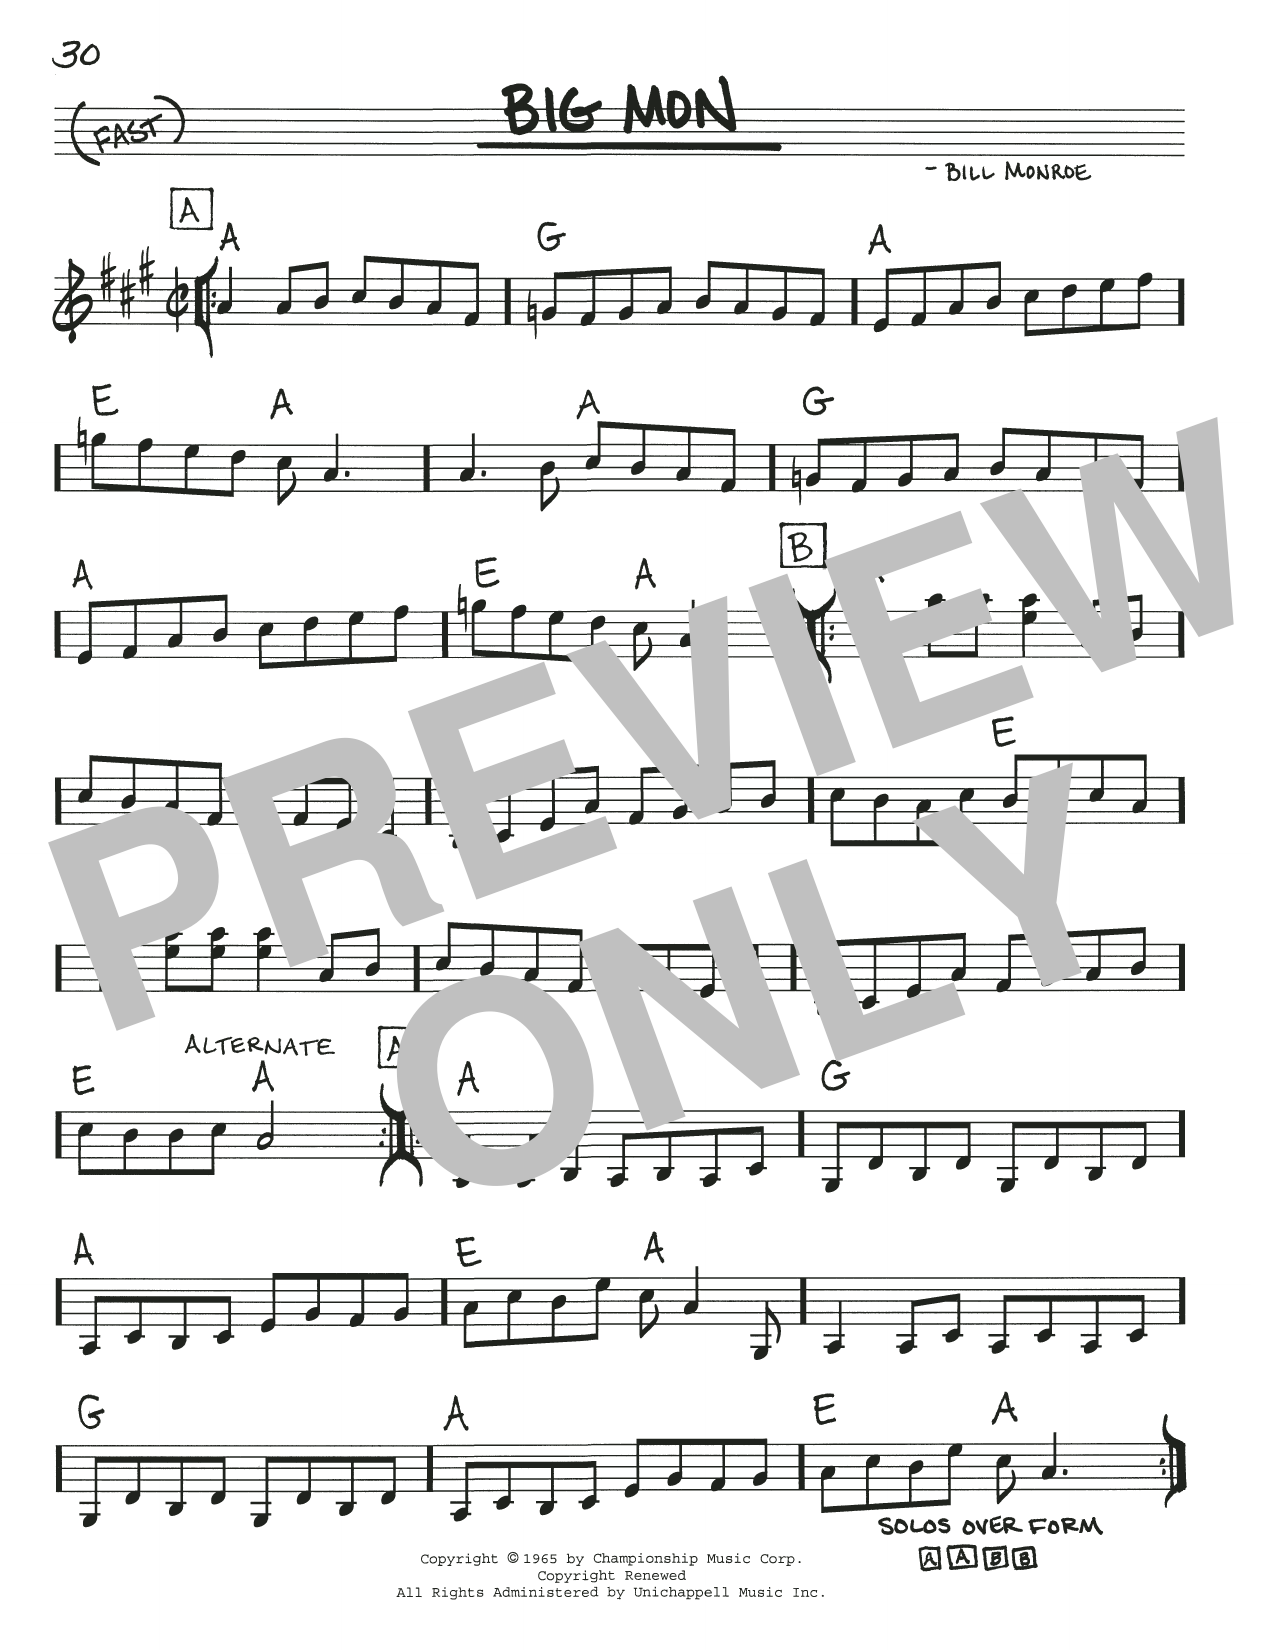 Bill Monroe Big Mon Sheet Music Notes & Chords for Real Book – Melody, Lyrics & Chords - Download or Print PDF